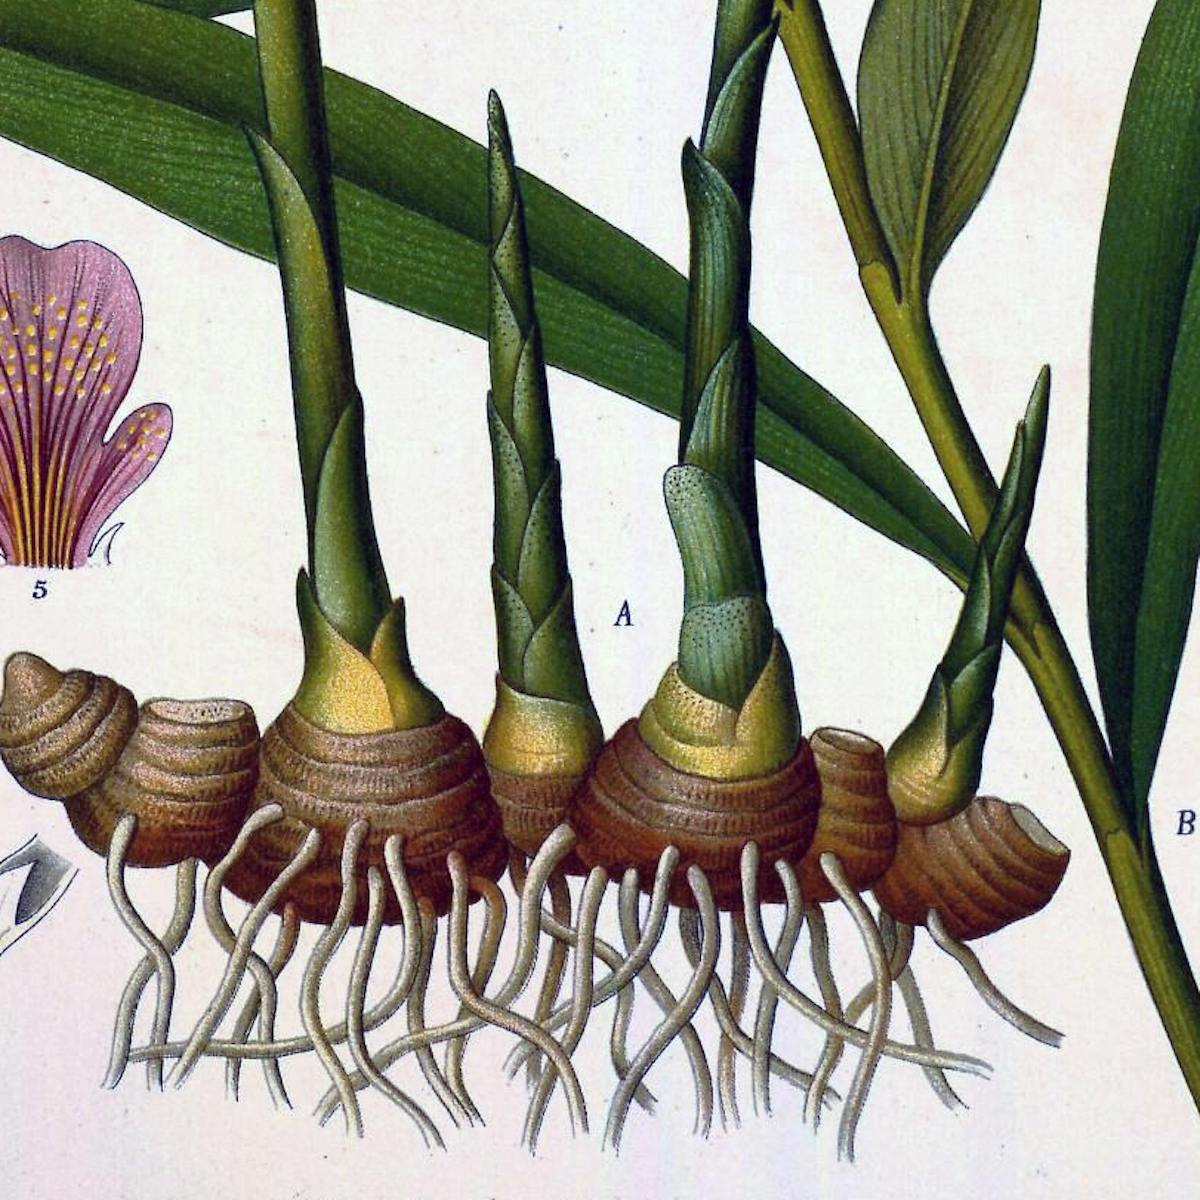 Illustration of Zingiber officinale Roscoe (ginger plant)